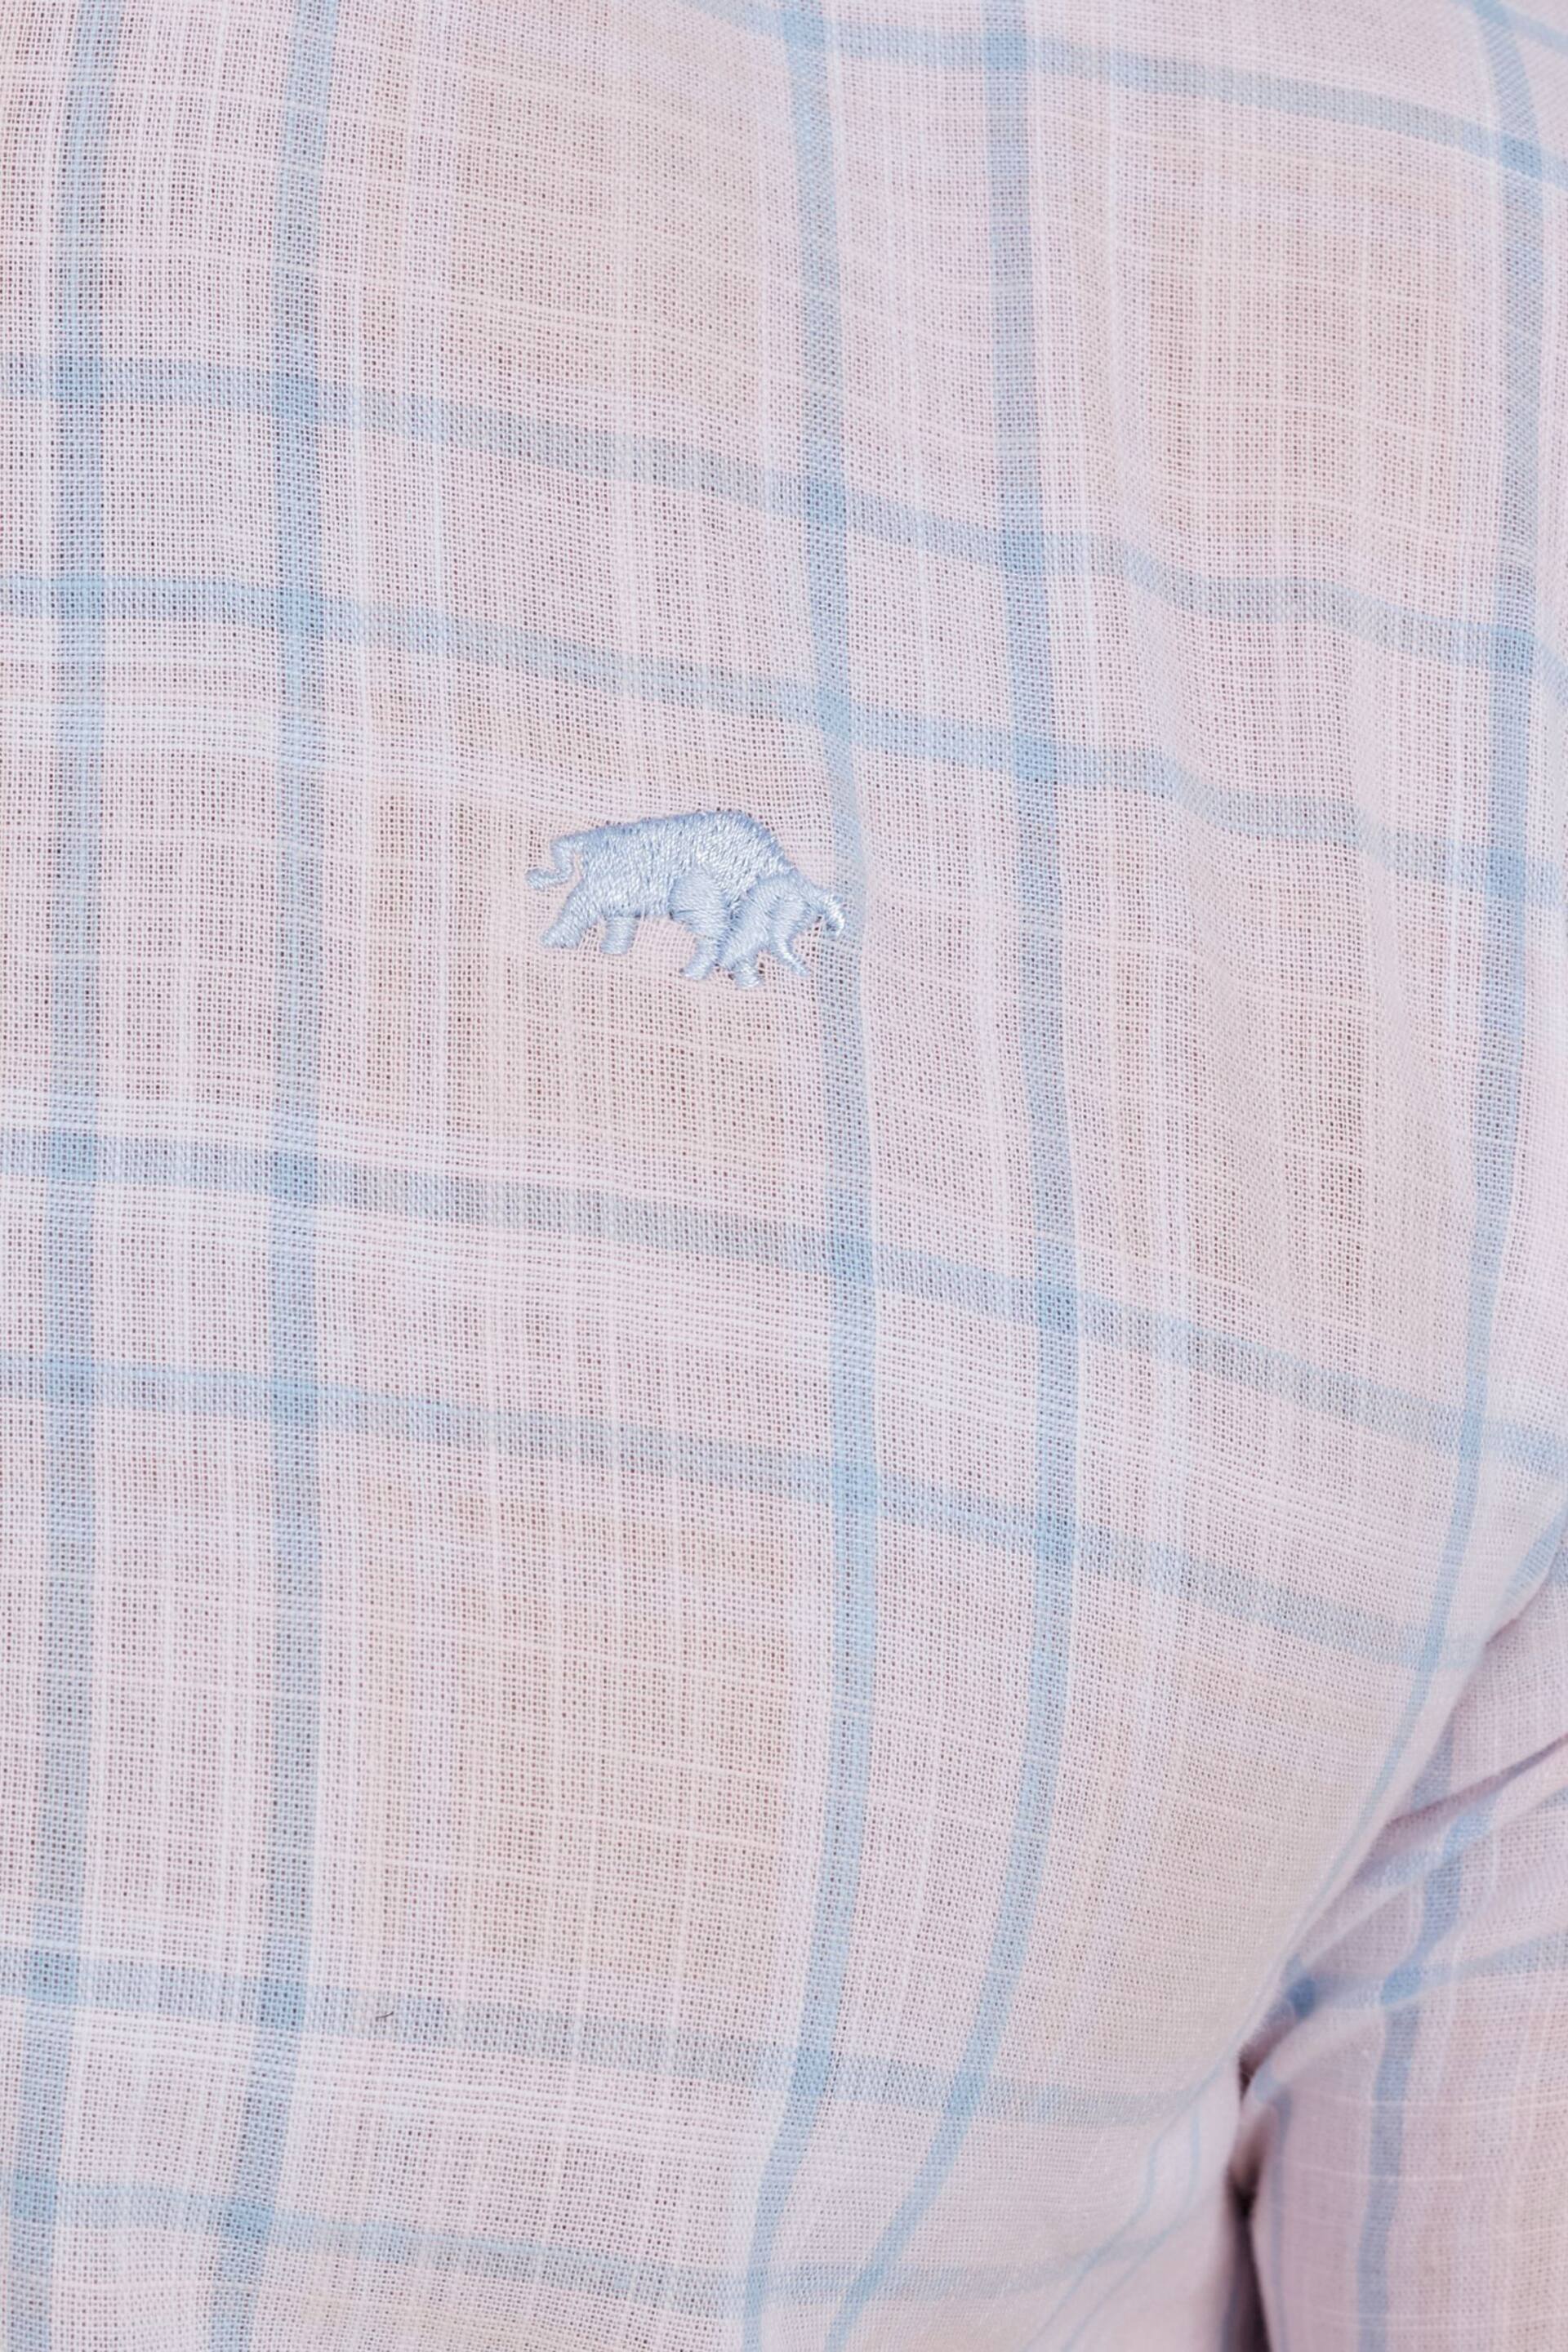 Raging Bull Pink Short Sleeve Plaid Check Linen Look Shirt - Image 6 of 6